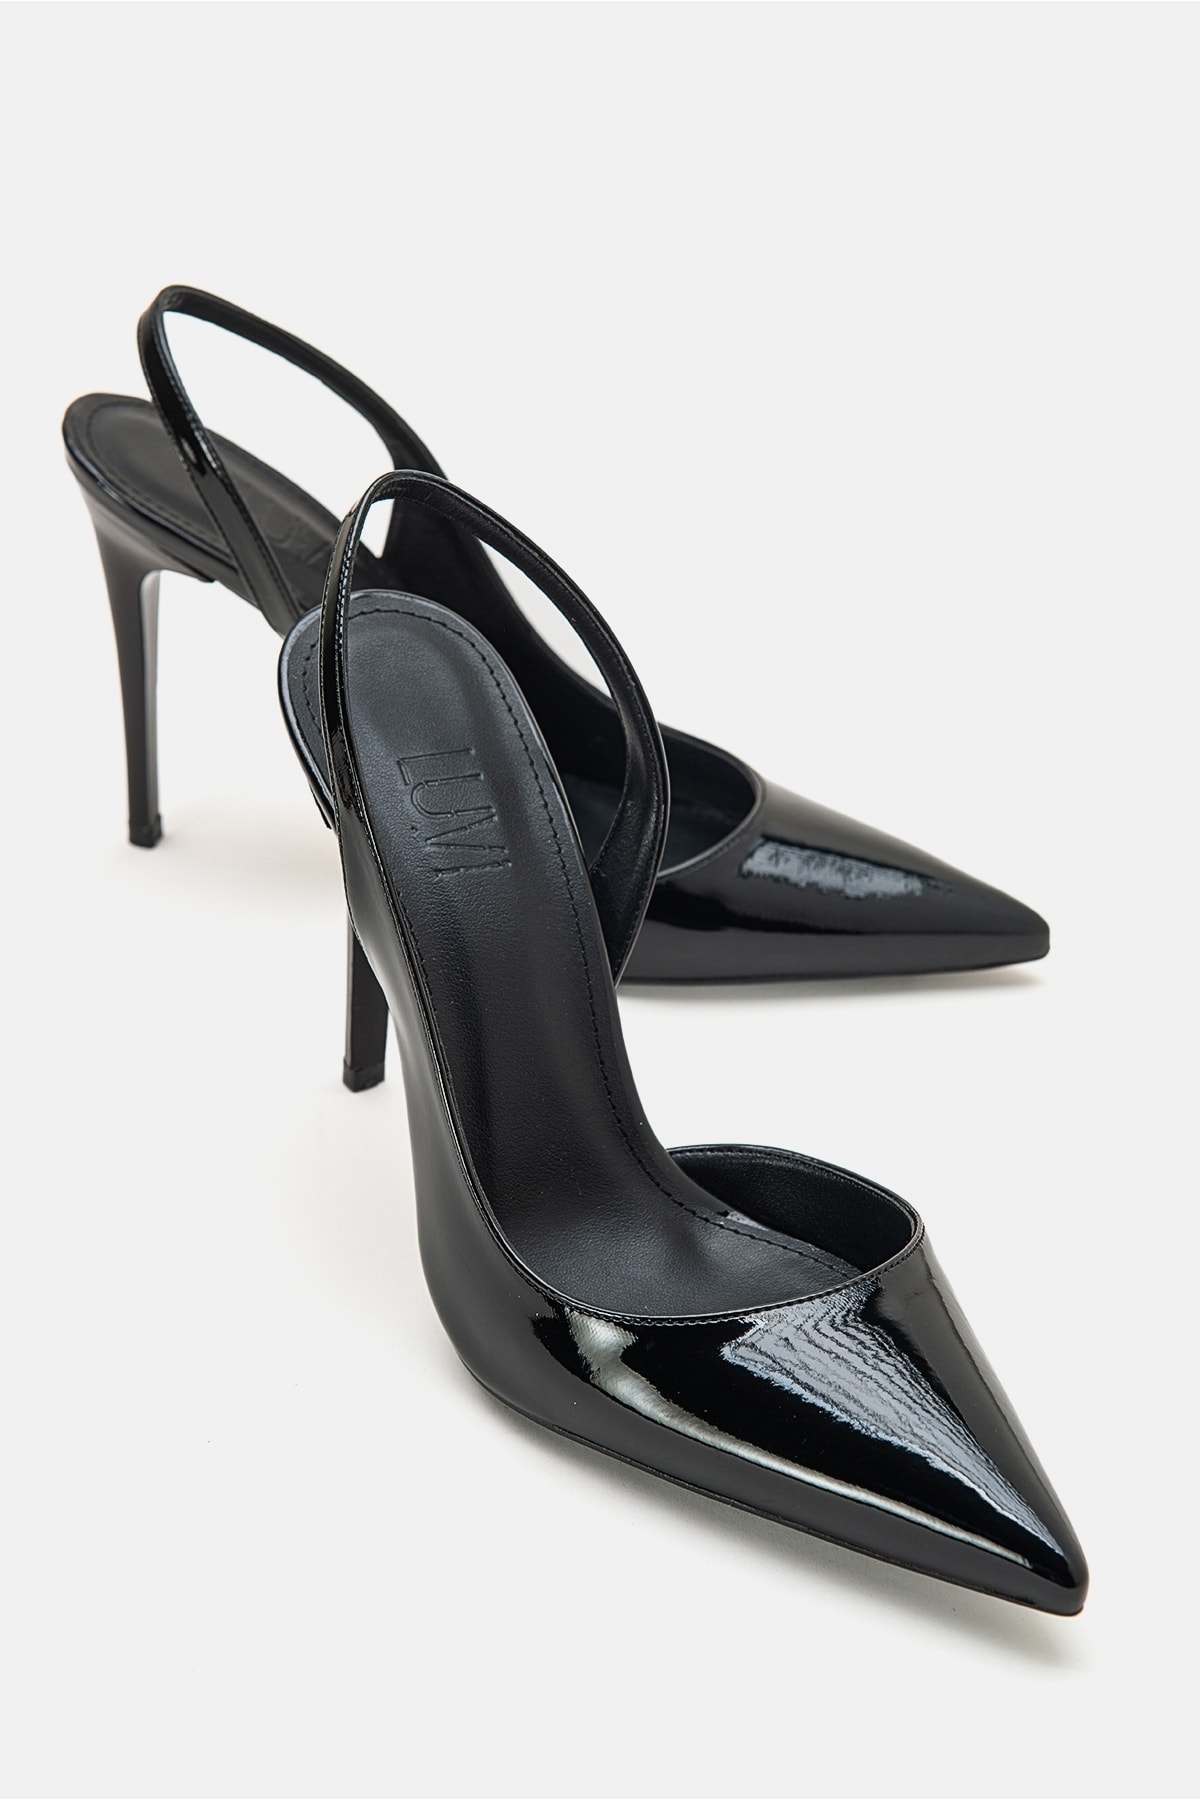 LuviShoes Twine Siyah Rugan Kadın Topuklu Ayakkabı